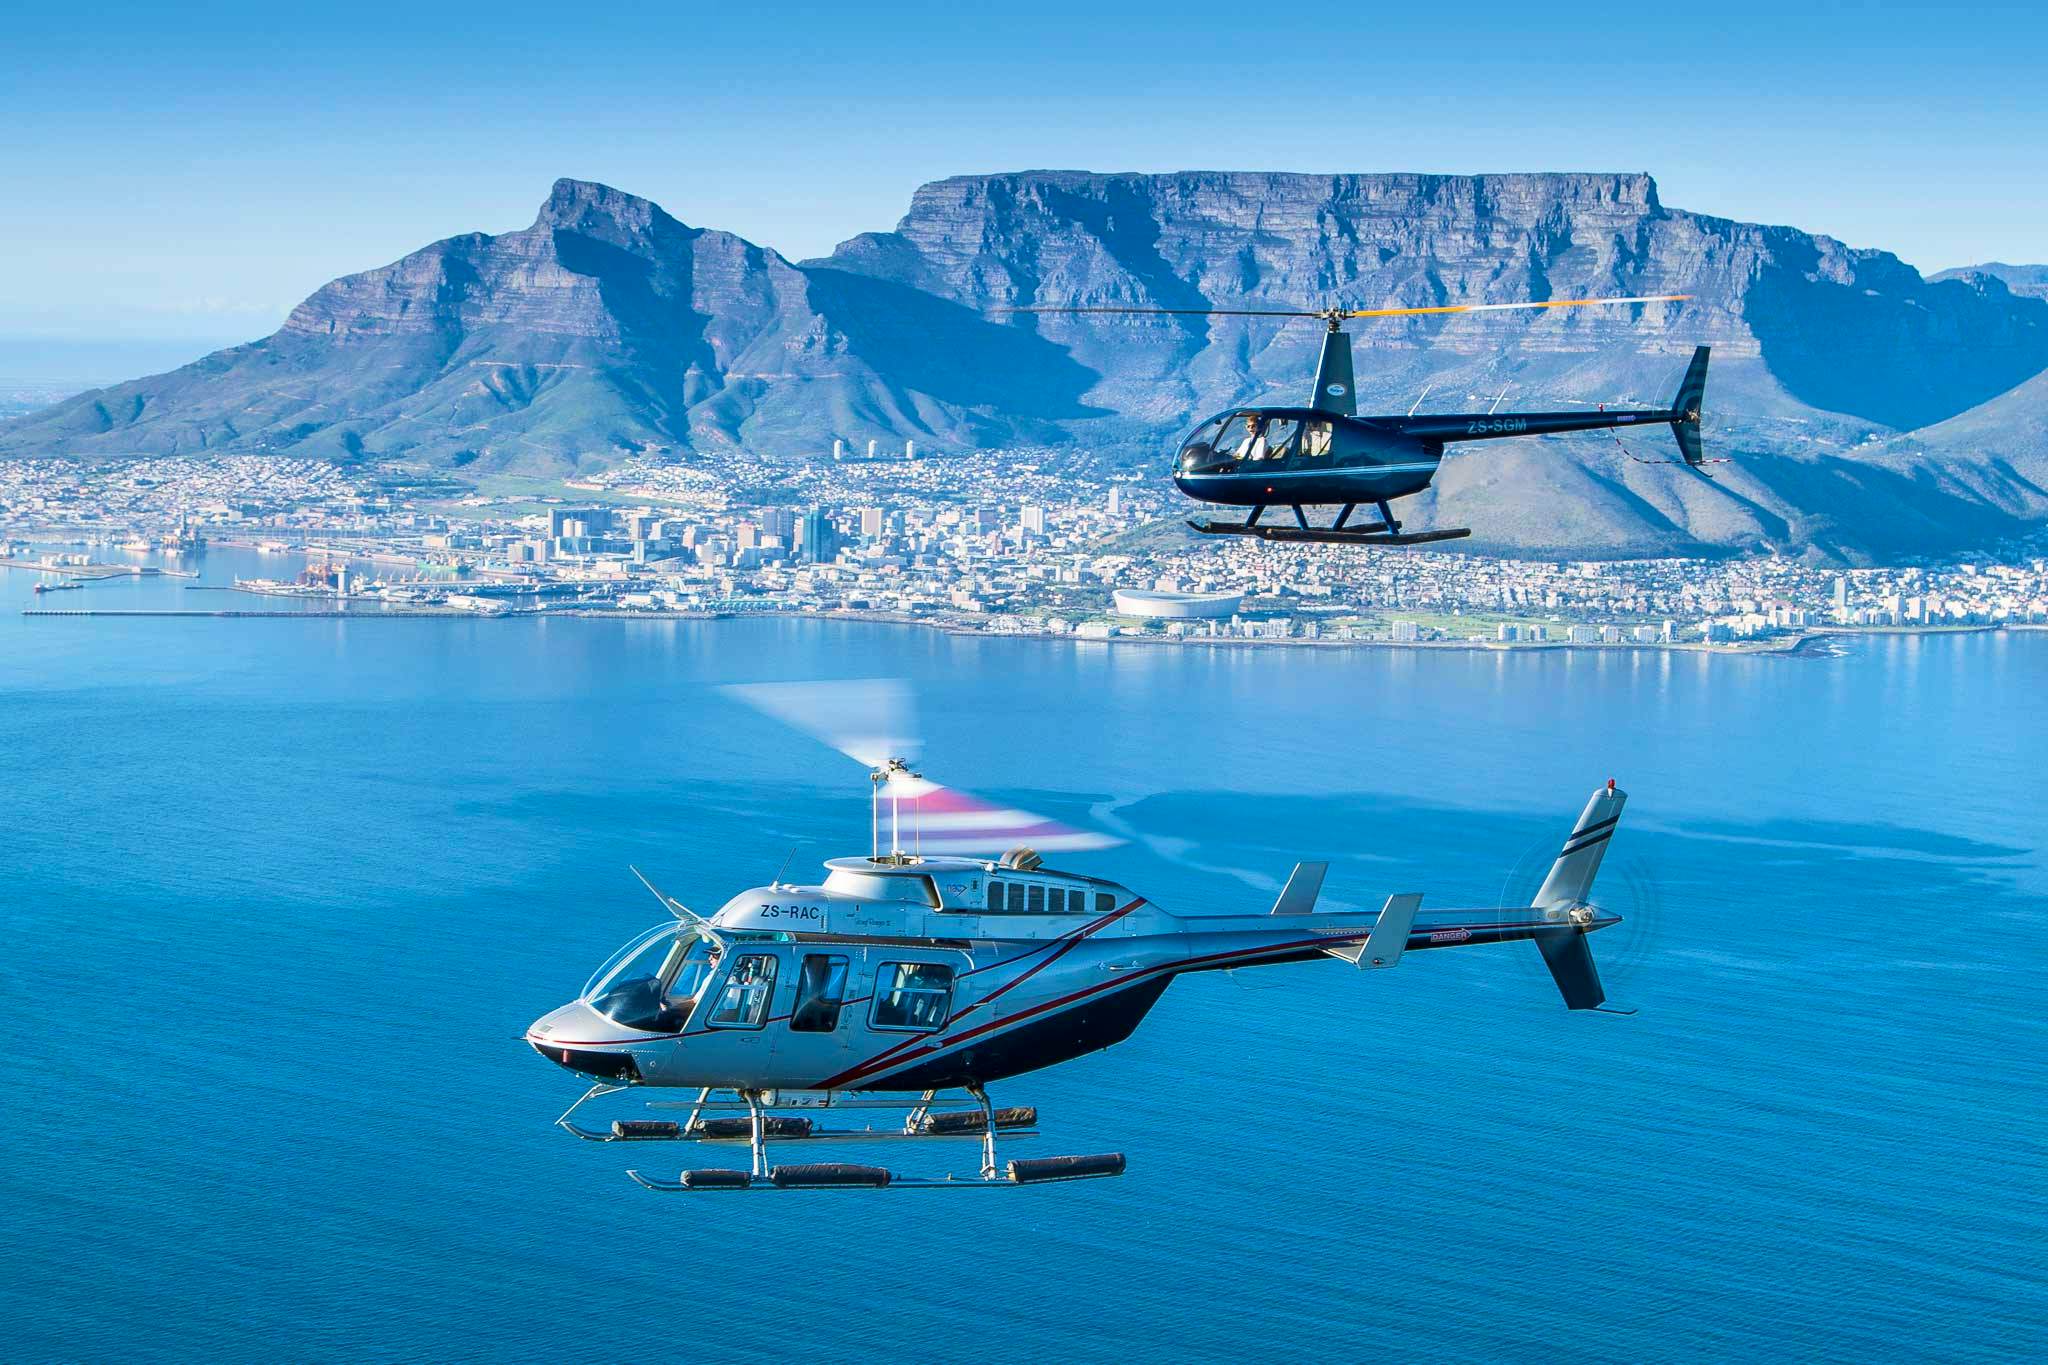 Cape Town Helicopter Tour: Atlantic Coast